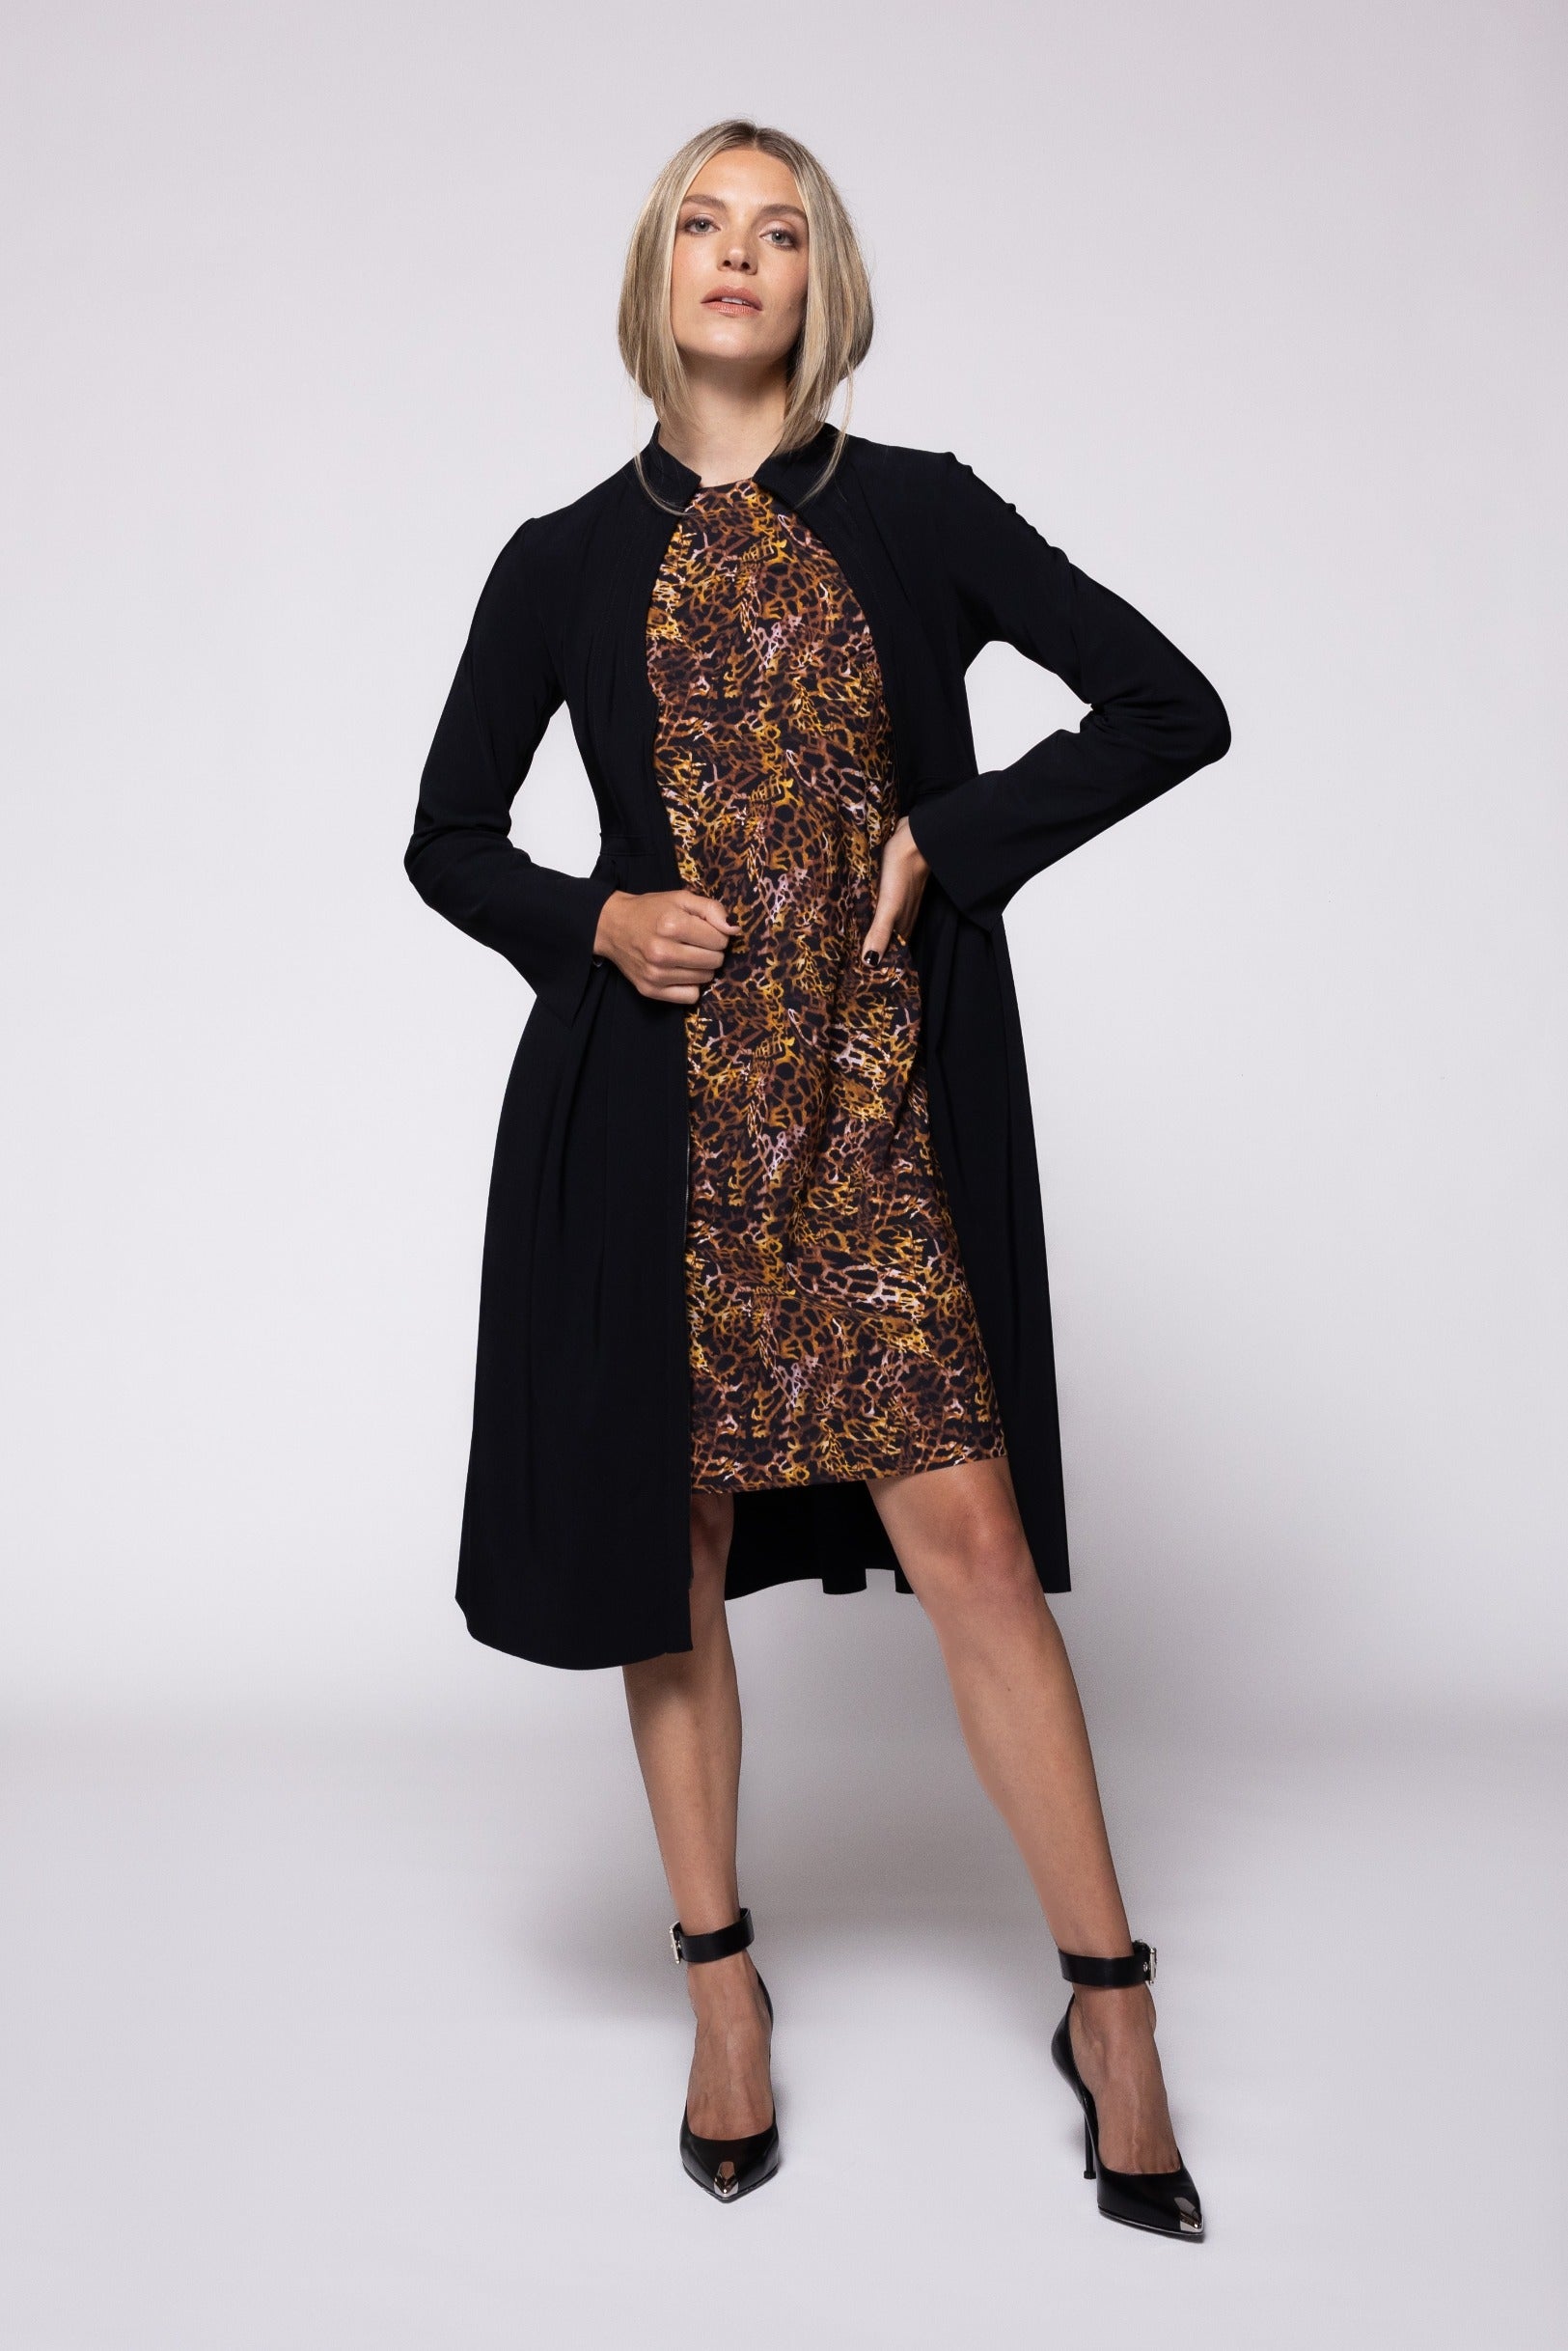 Autumn Dress - Jaguar Print